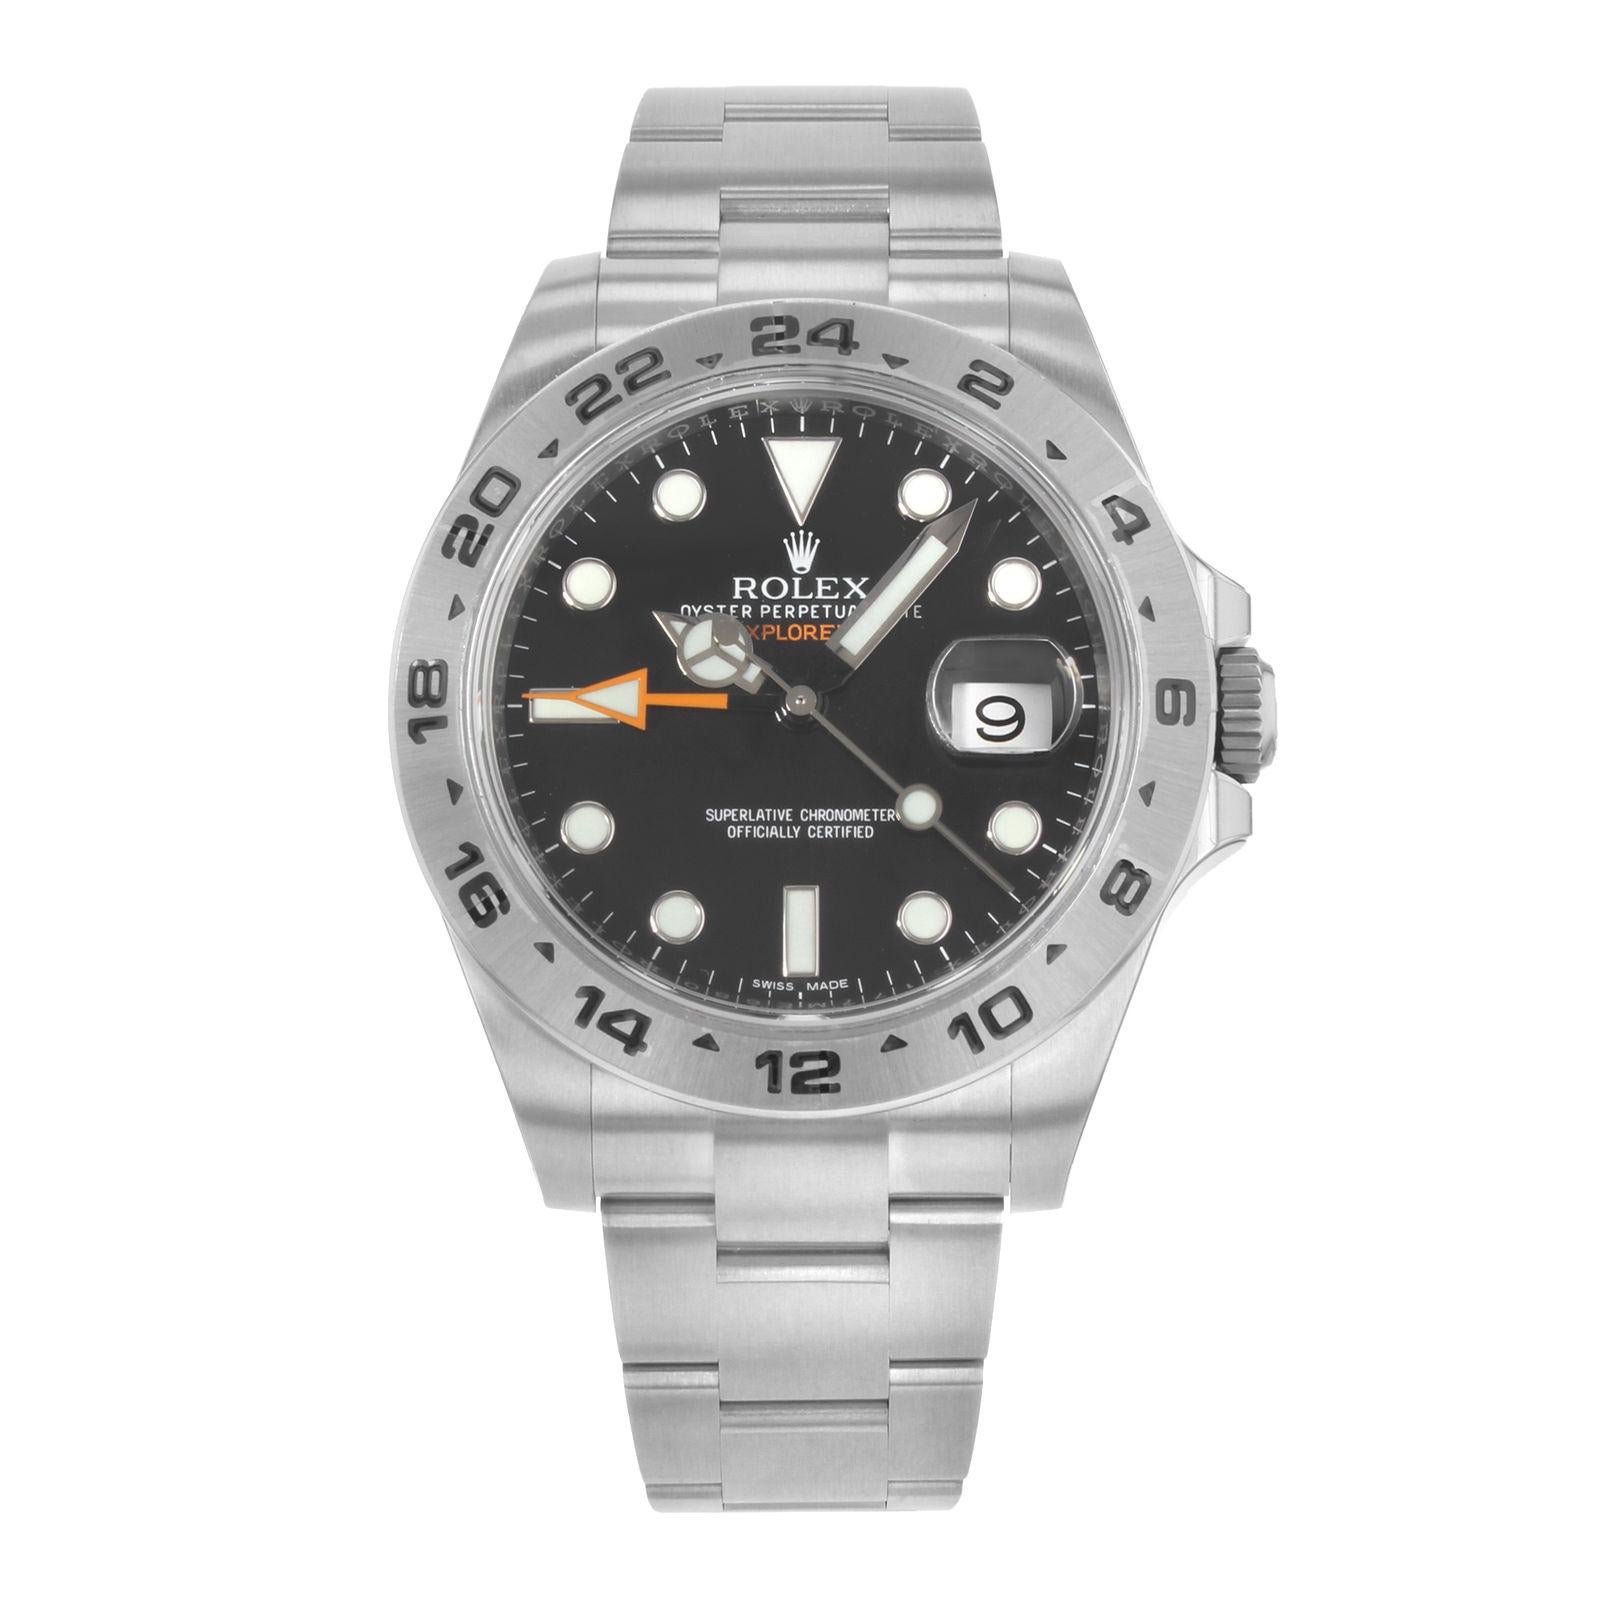 Rolex Explorer II 216570 Bk Black Dial GMT Steel Automatic Men's Watch